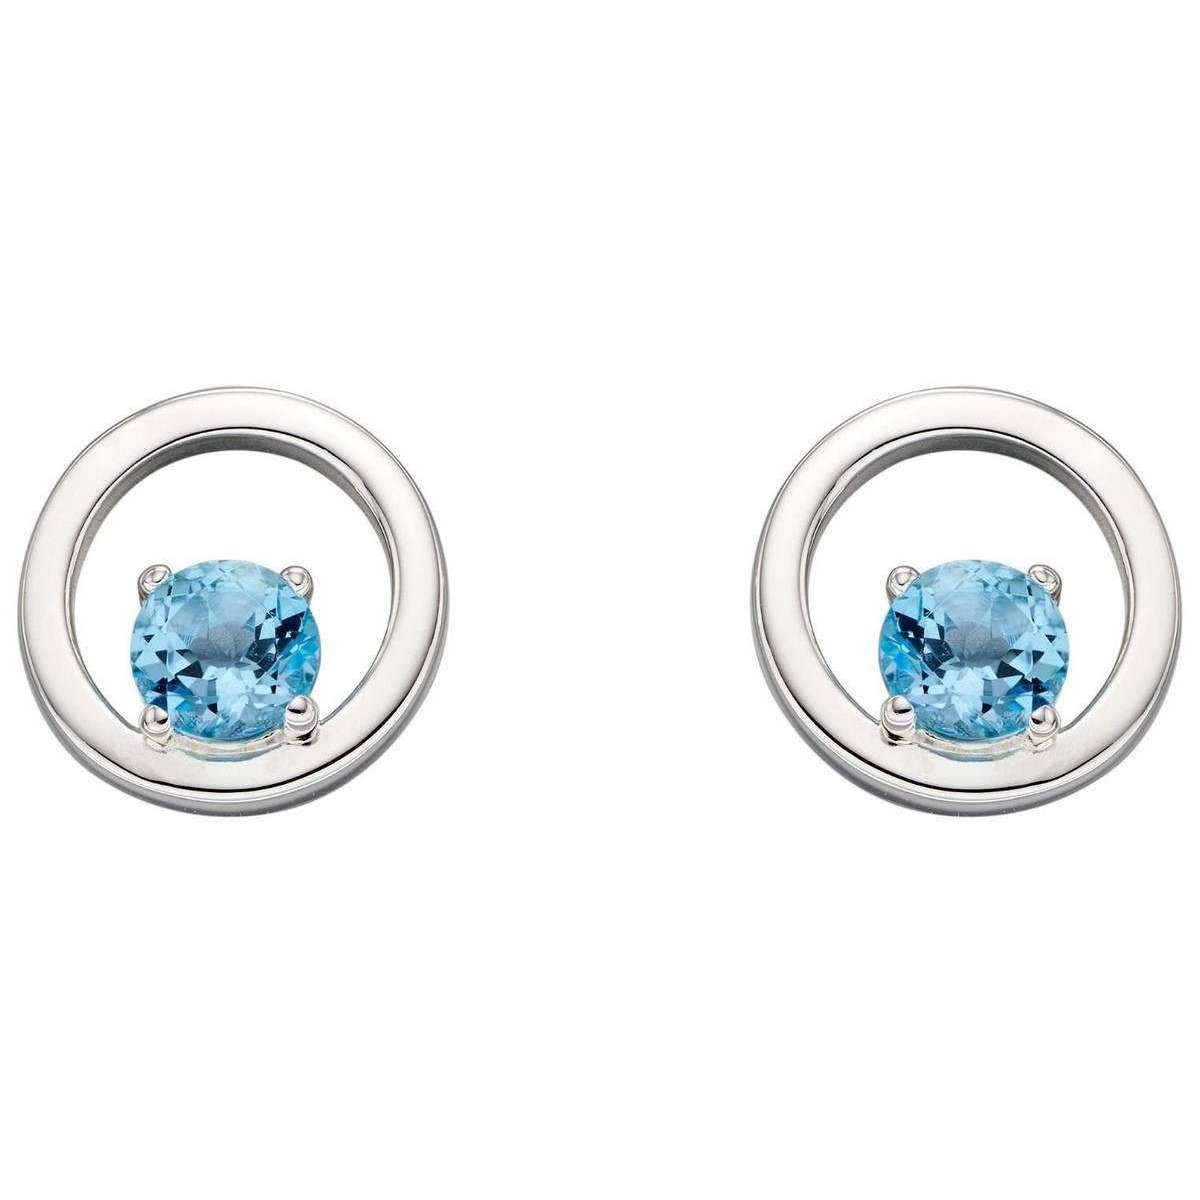 Elements Silver Round Topaz Earrings - Silver/Blue